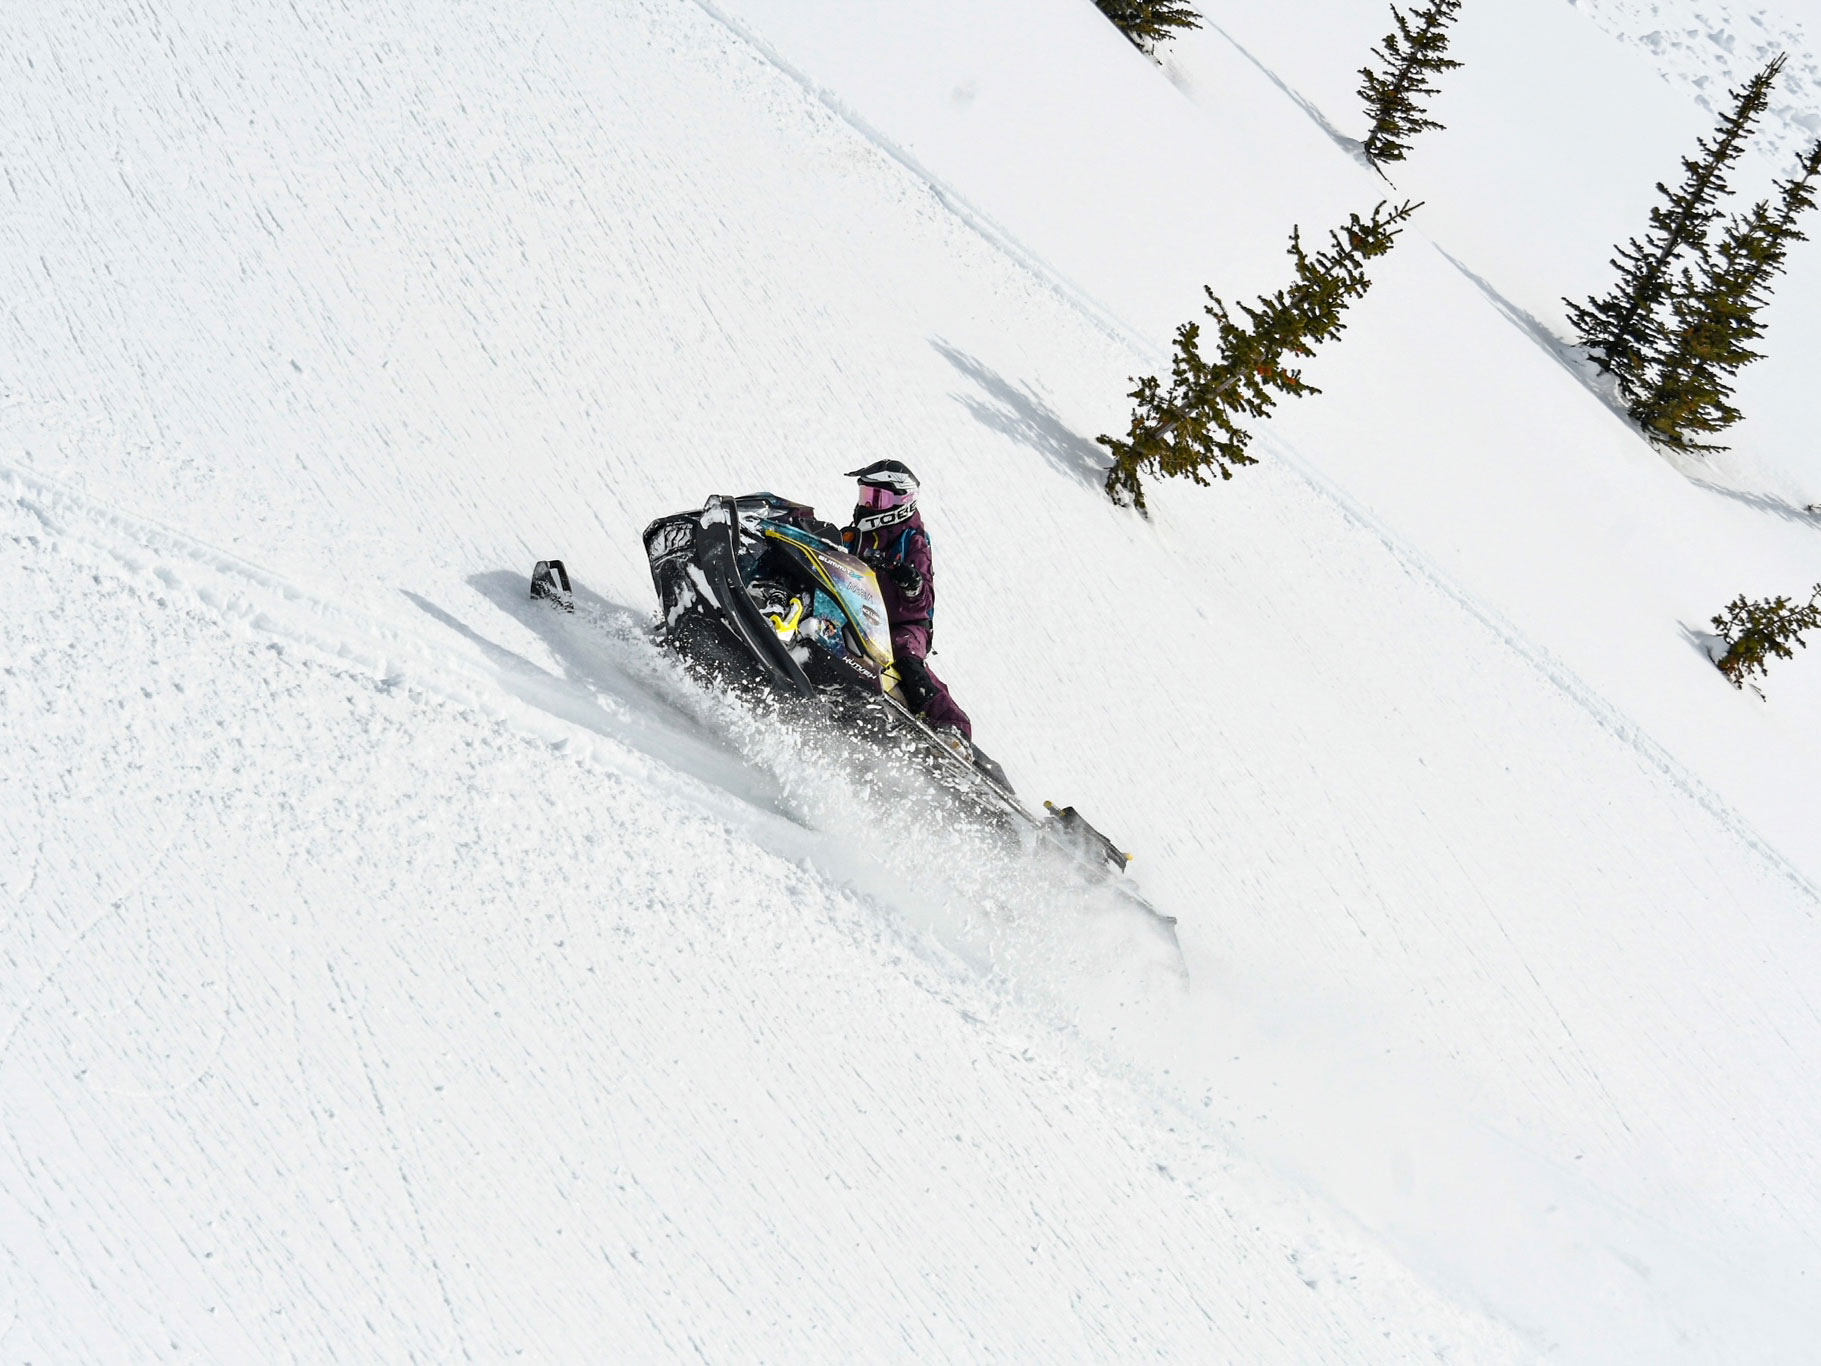 Ski-Doo Ambassador Michelle Salt riding a snowmobile on a hill